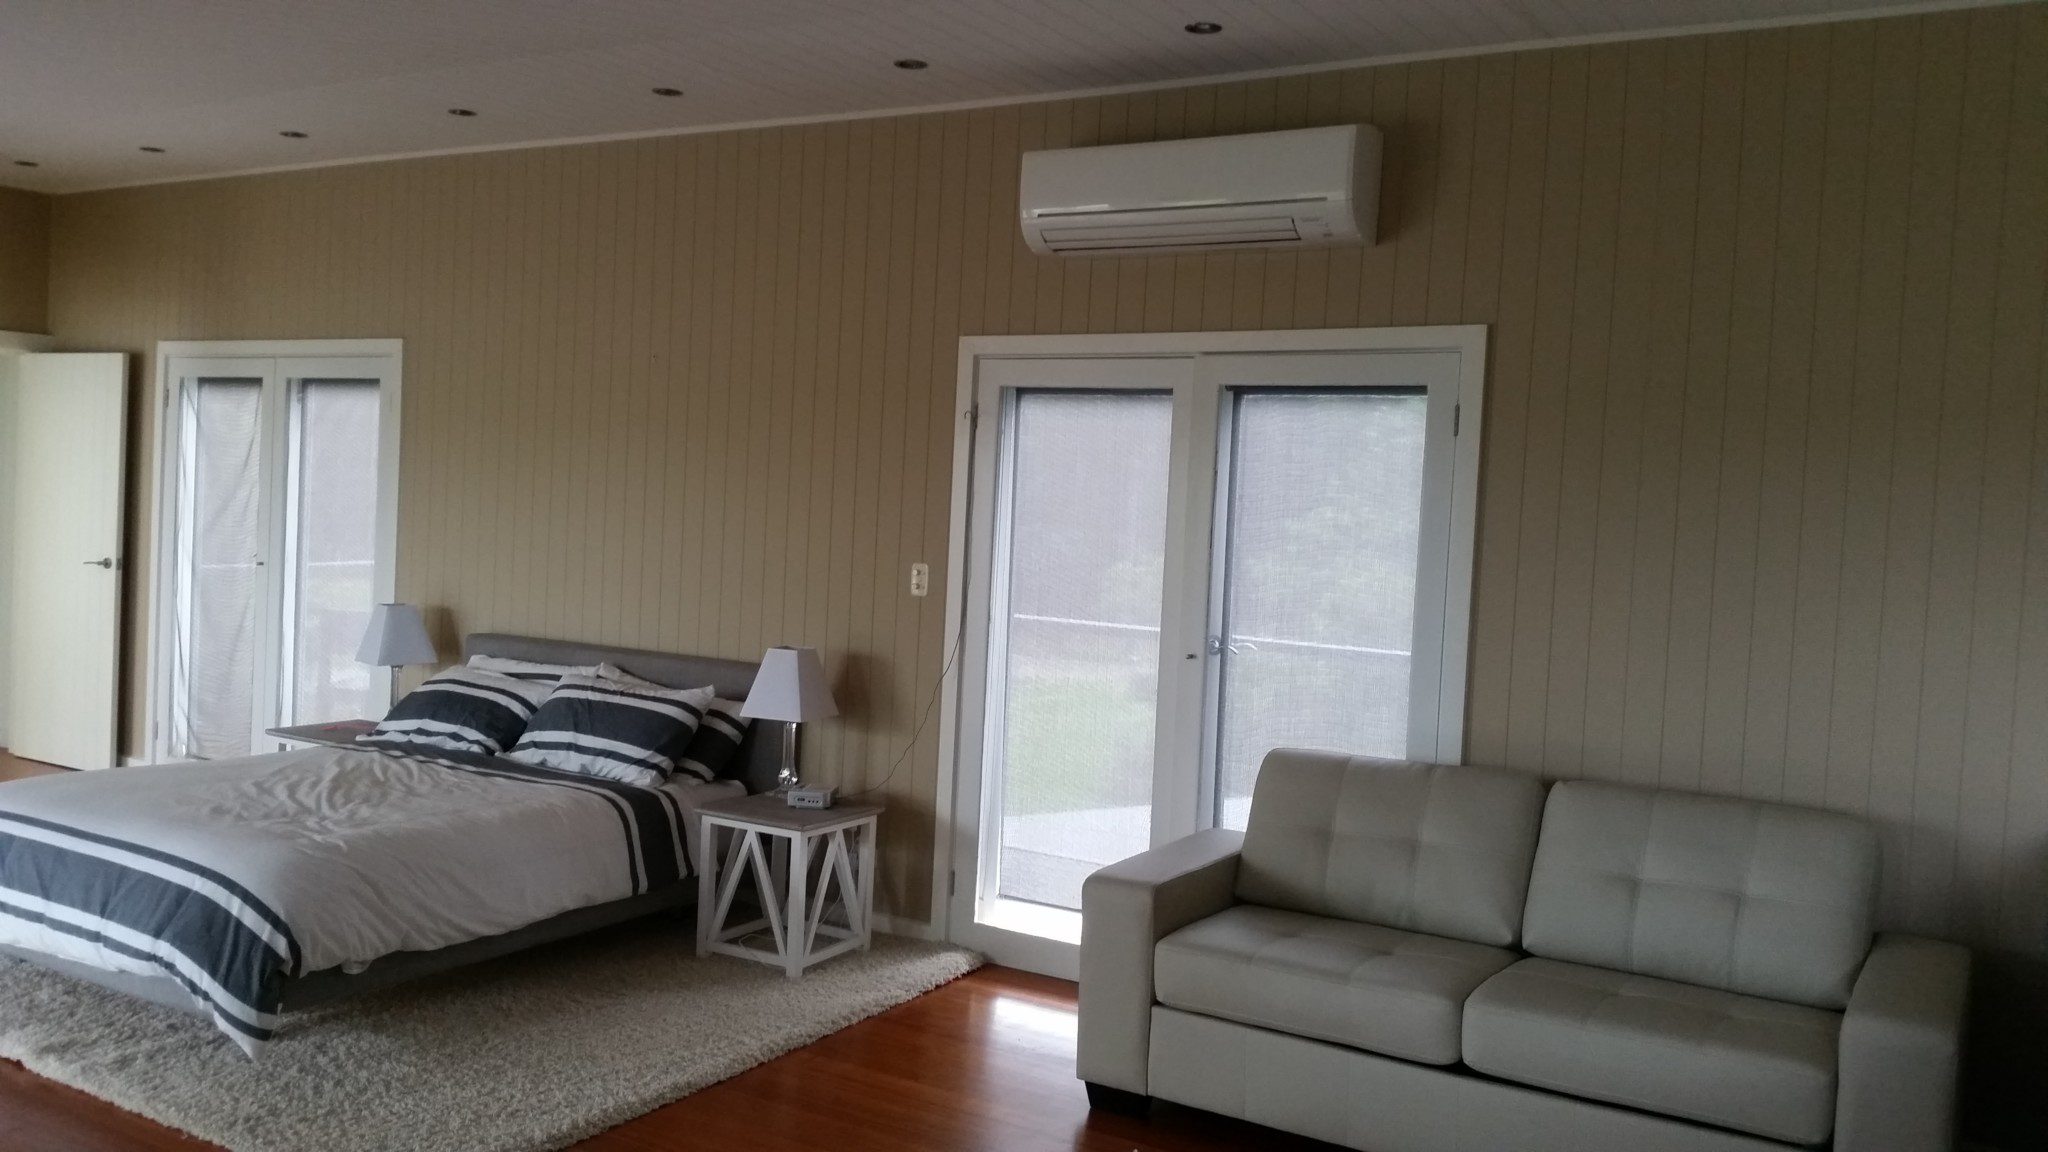 Shoalhaven Air Conditioning split indoor unit installed